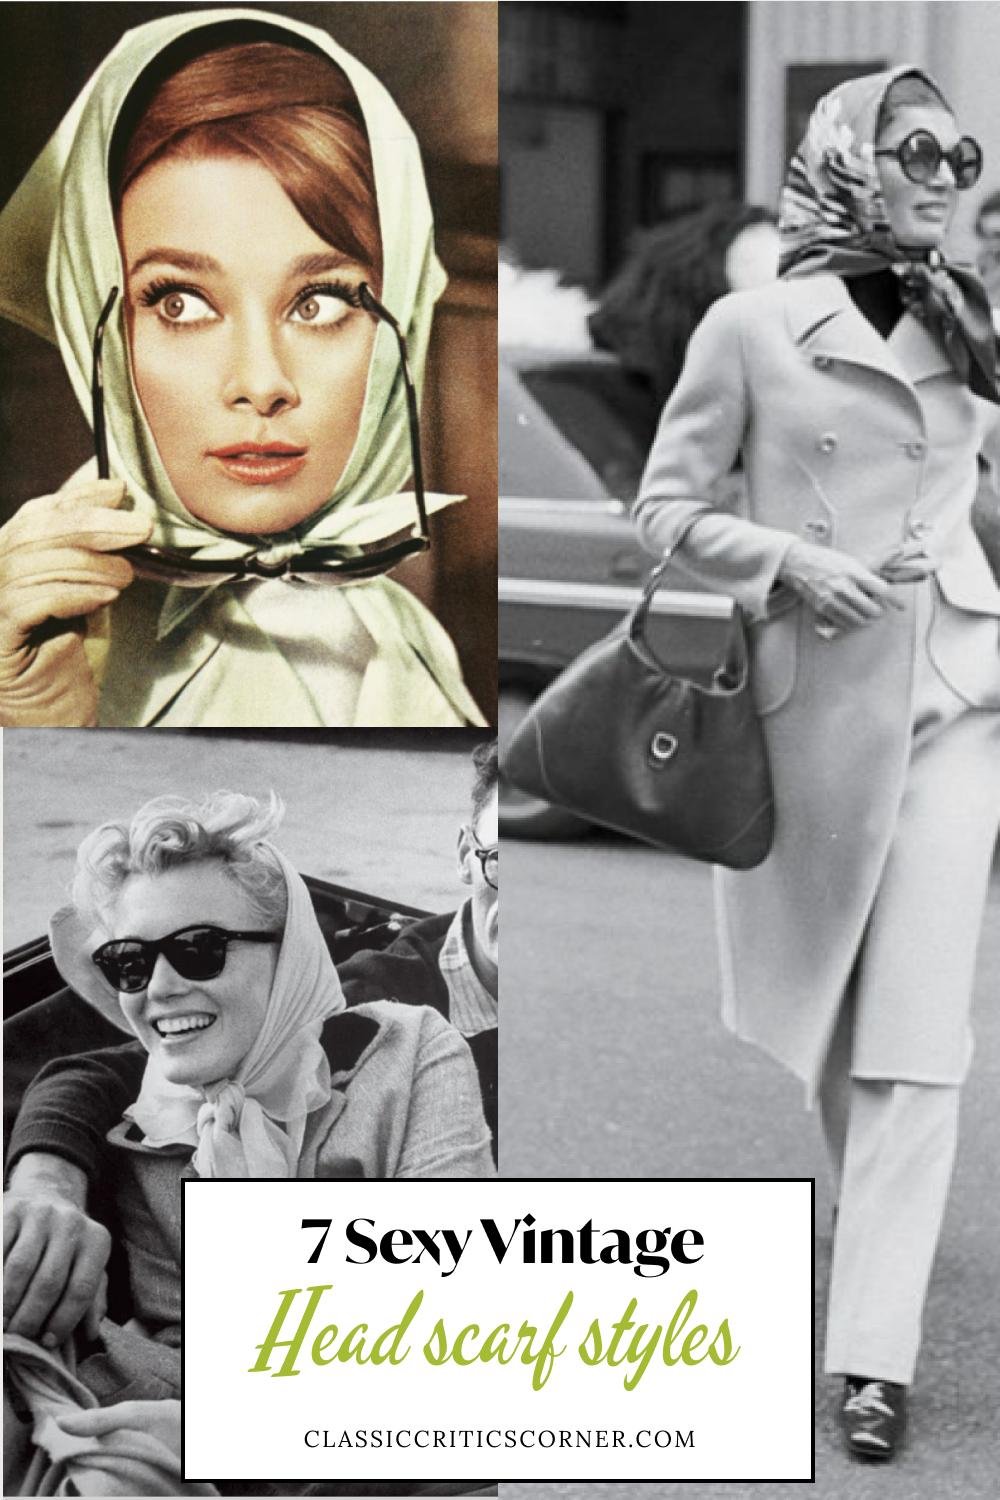 7 Vintage Scarf Styles — Classic Critics Corner - Vintage 1940s